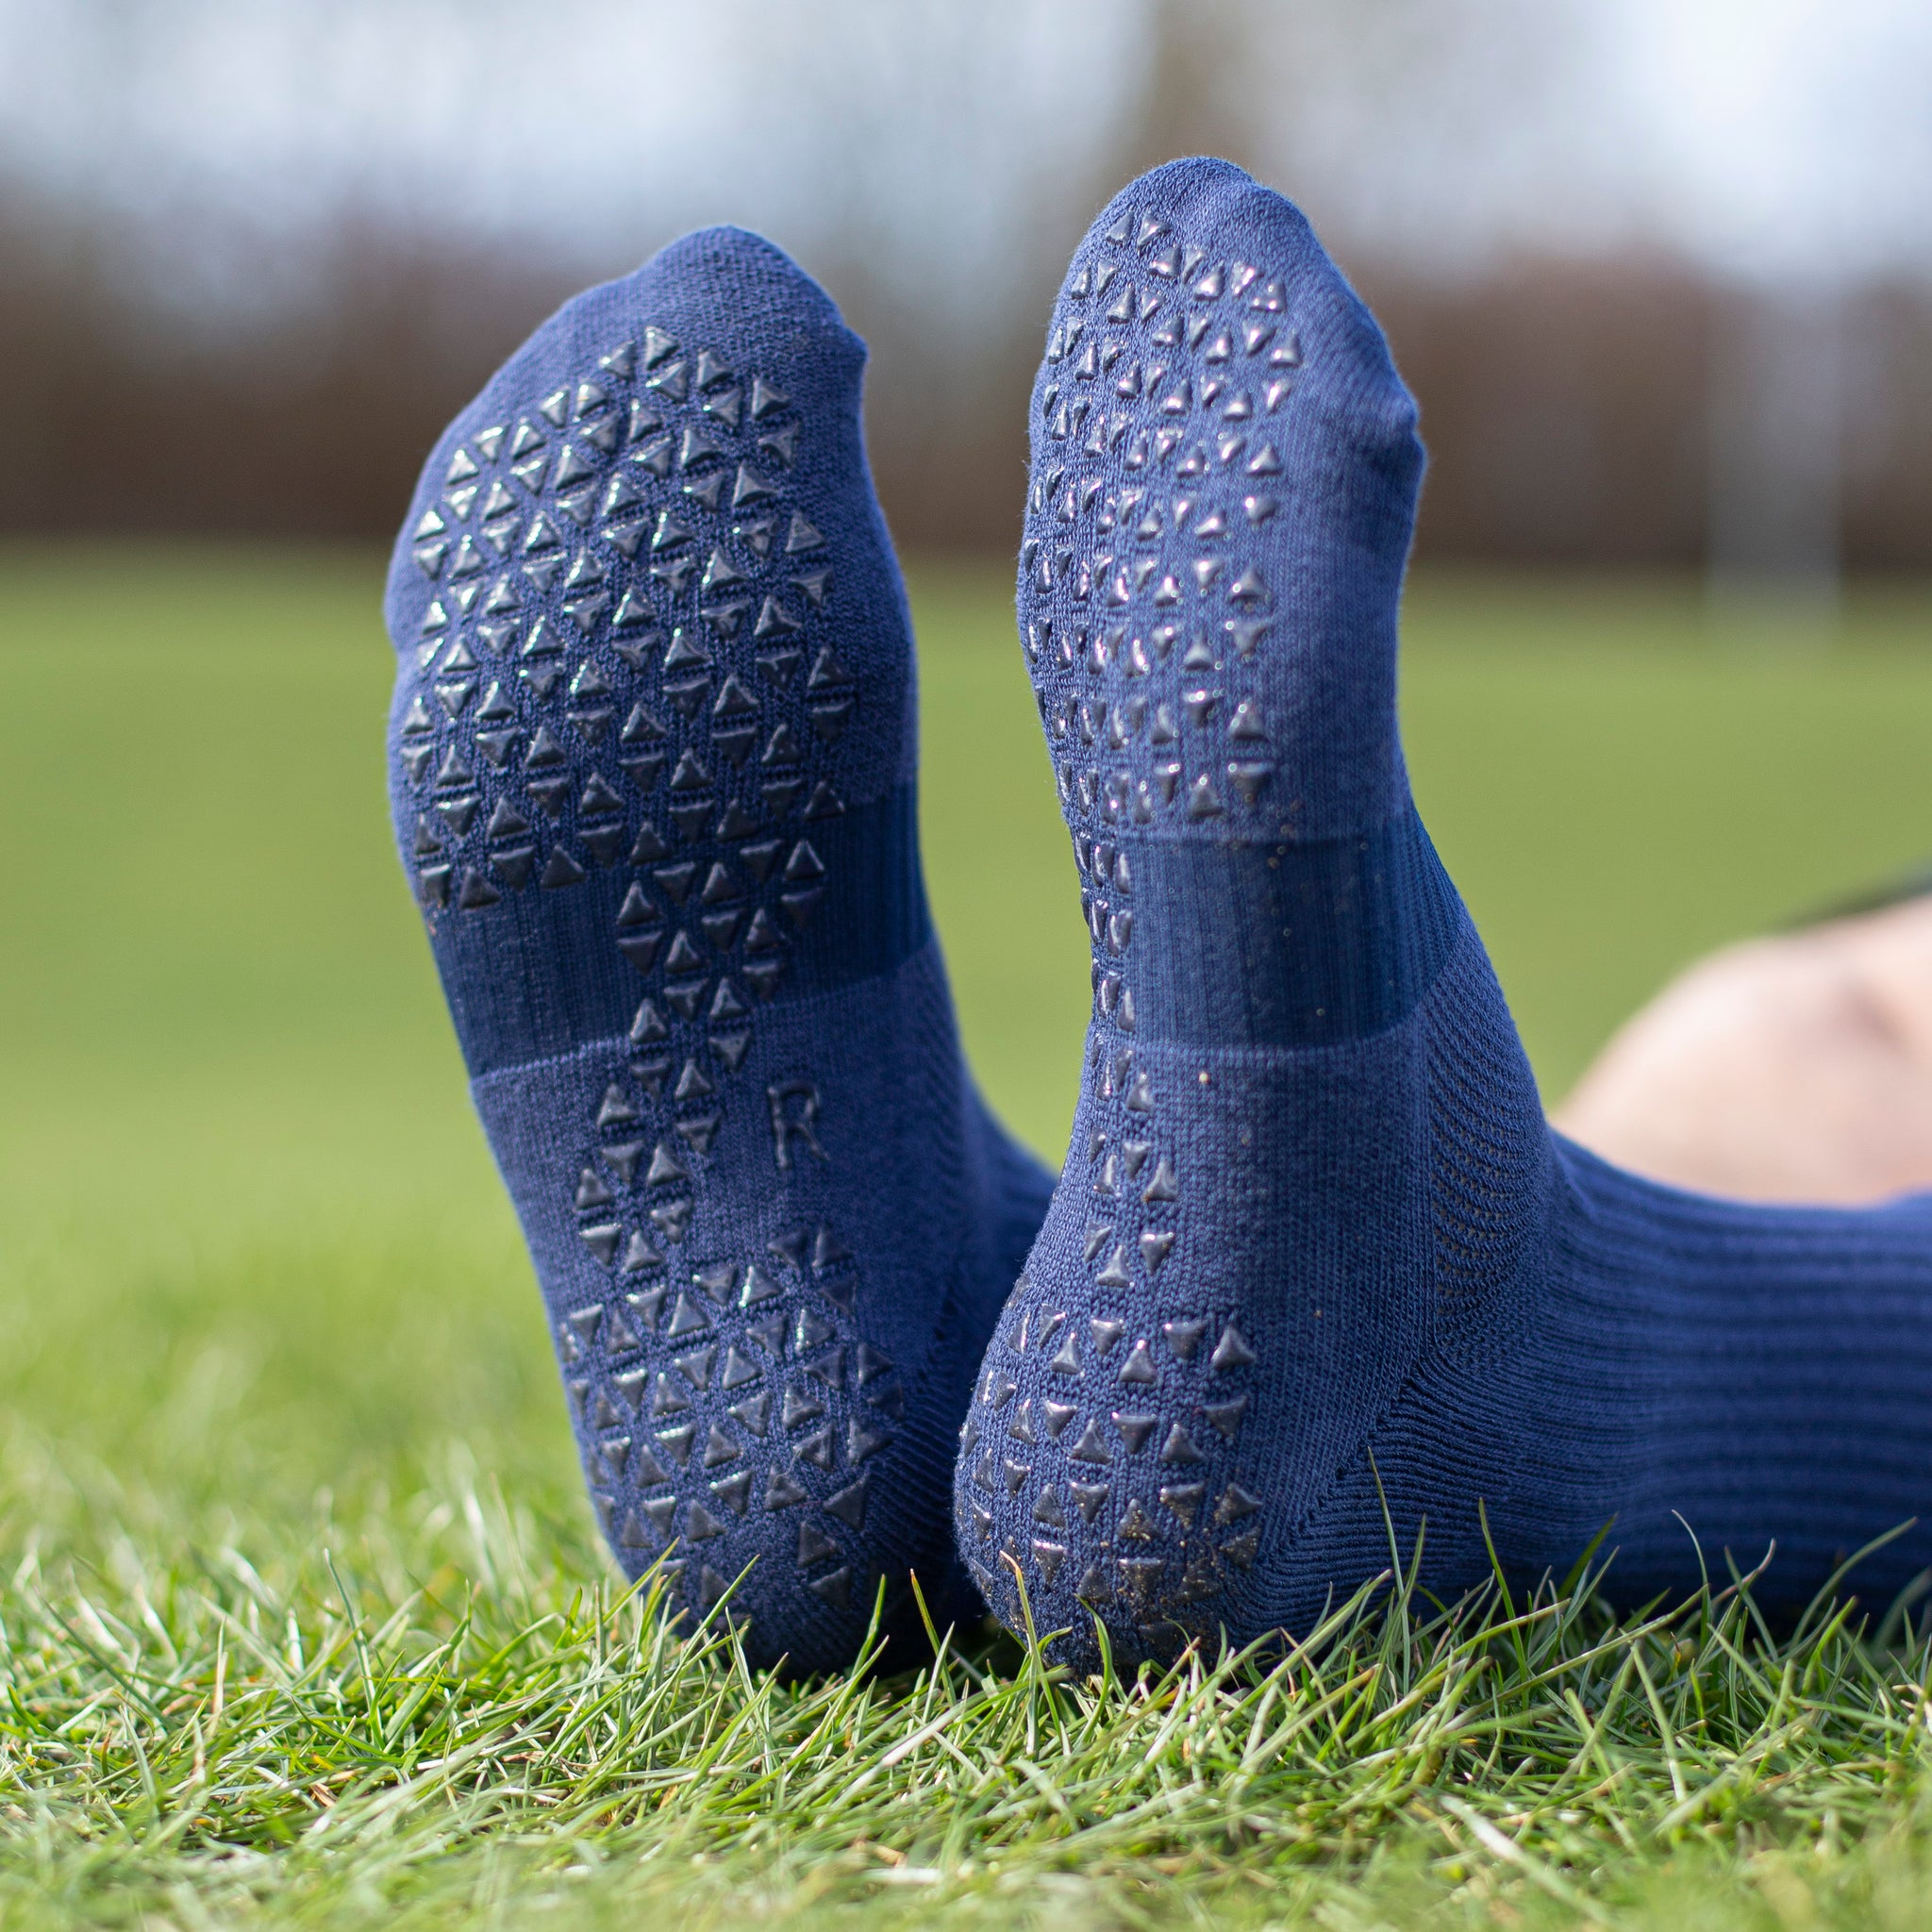 Pure Grip Socks Light Blue